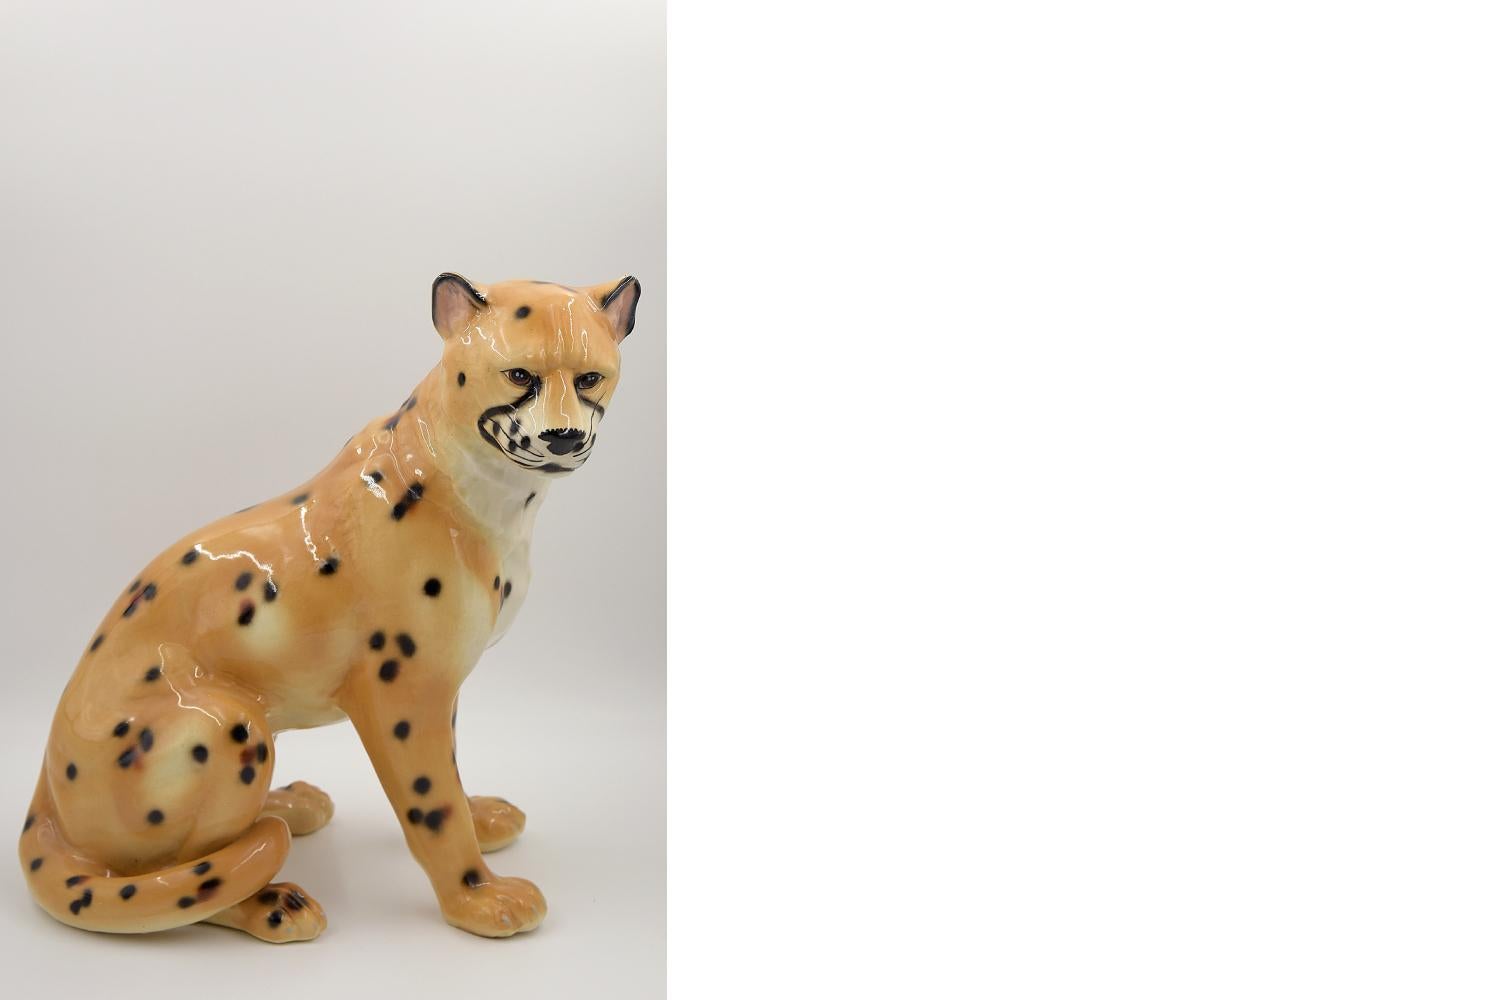 Painted Original Vintage Mid-Century Italian Modern Ceramic Cheetah Sculpture, 1970s For Sale